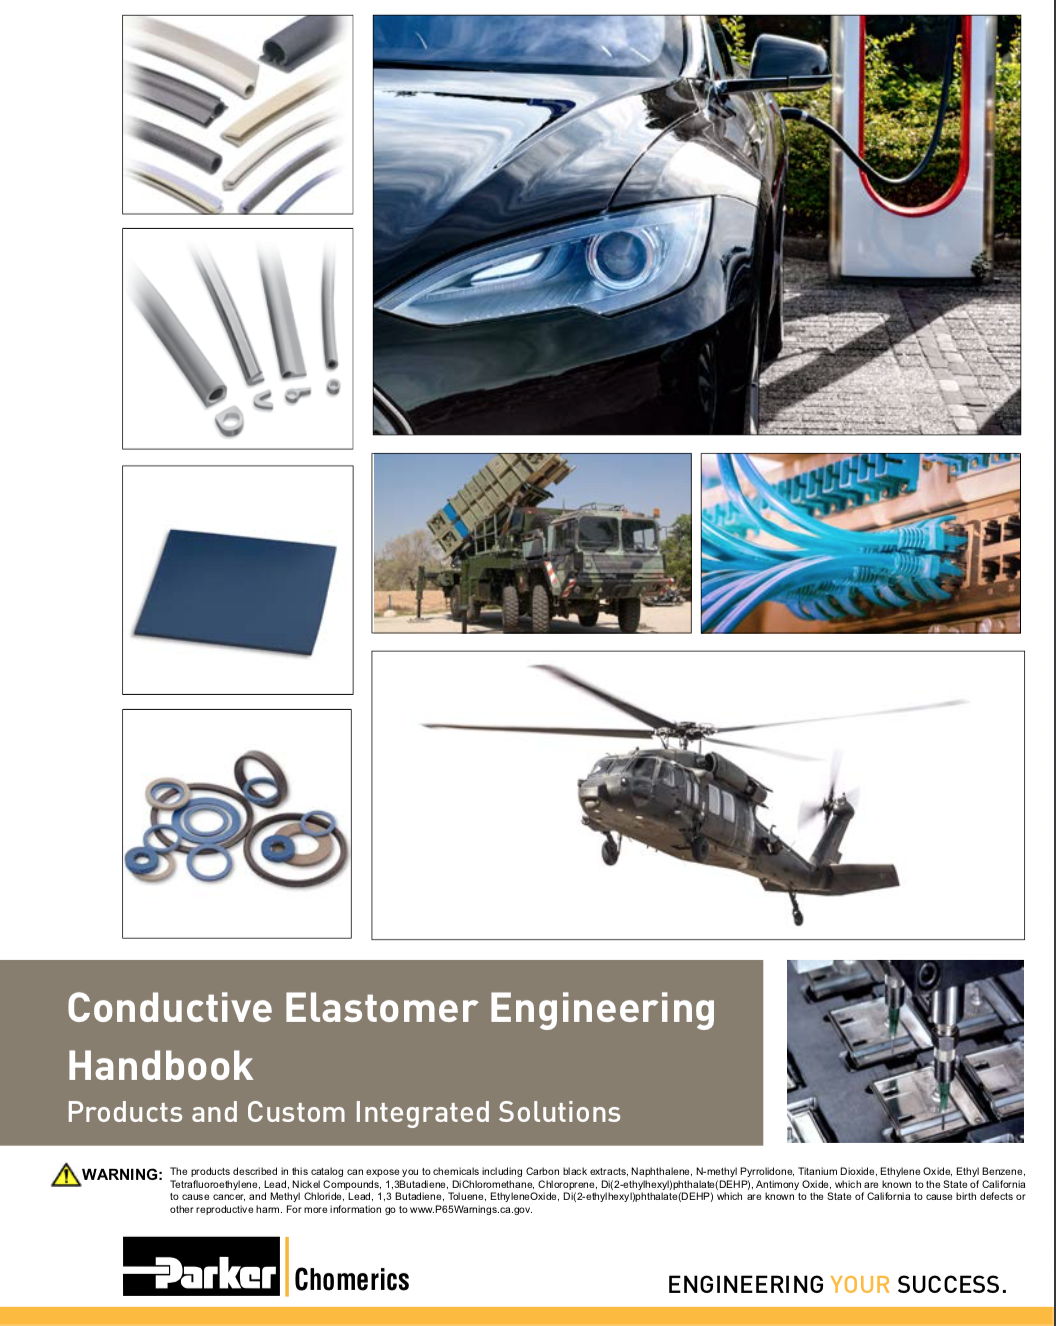 Conductive Elastomer Engineering Handbook